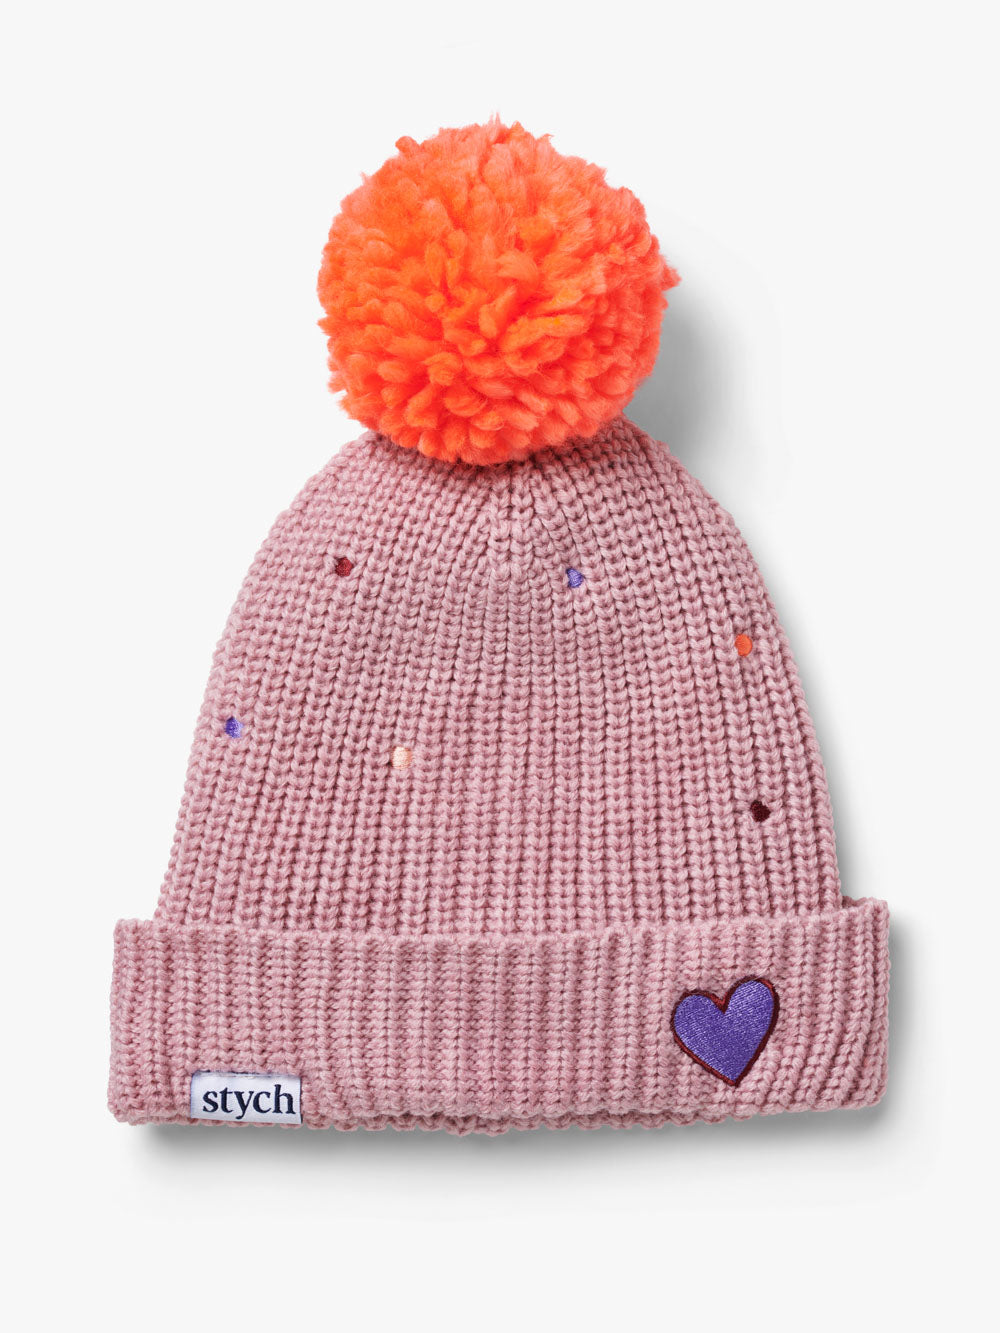 Stych Girl's Pink Ribbed Knit Orange Pom Heart Patch Beanie Size 3-5 6-8 years 